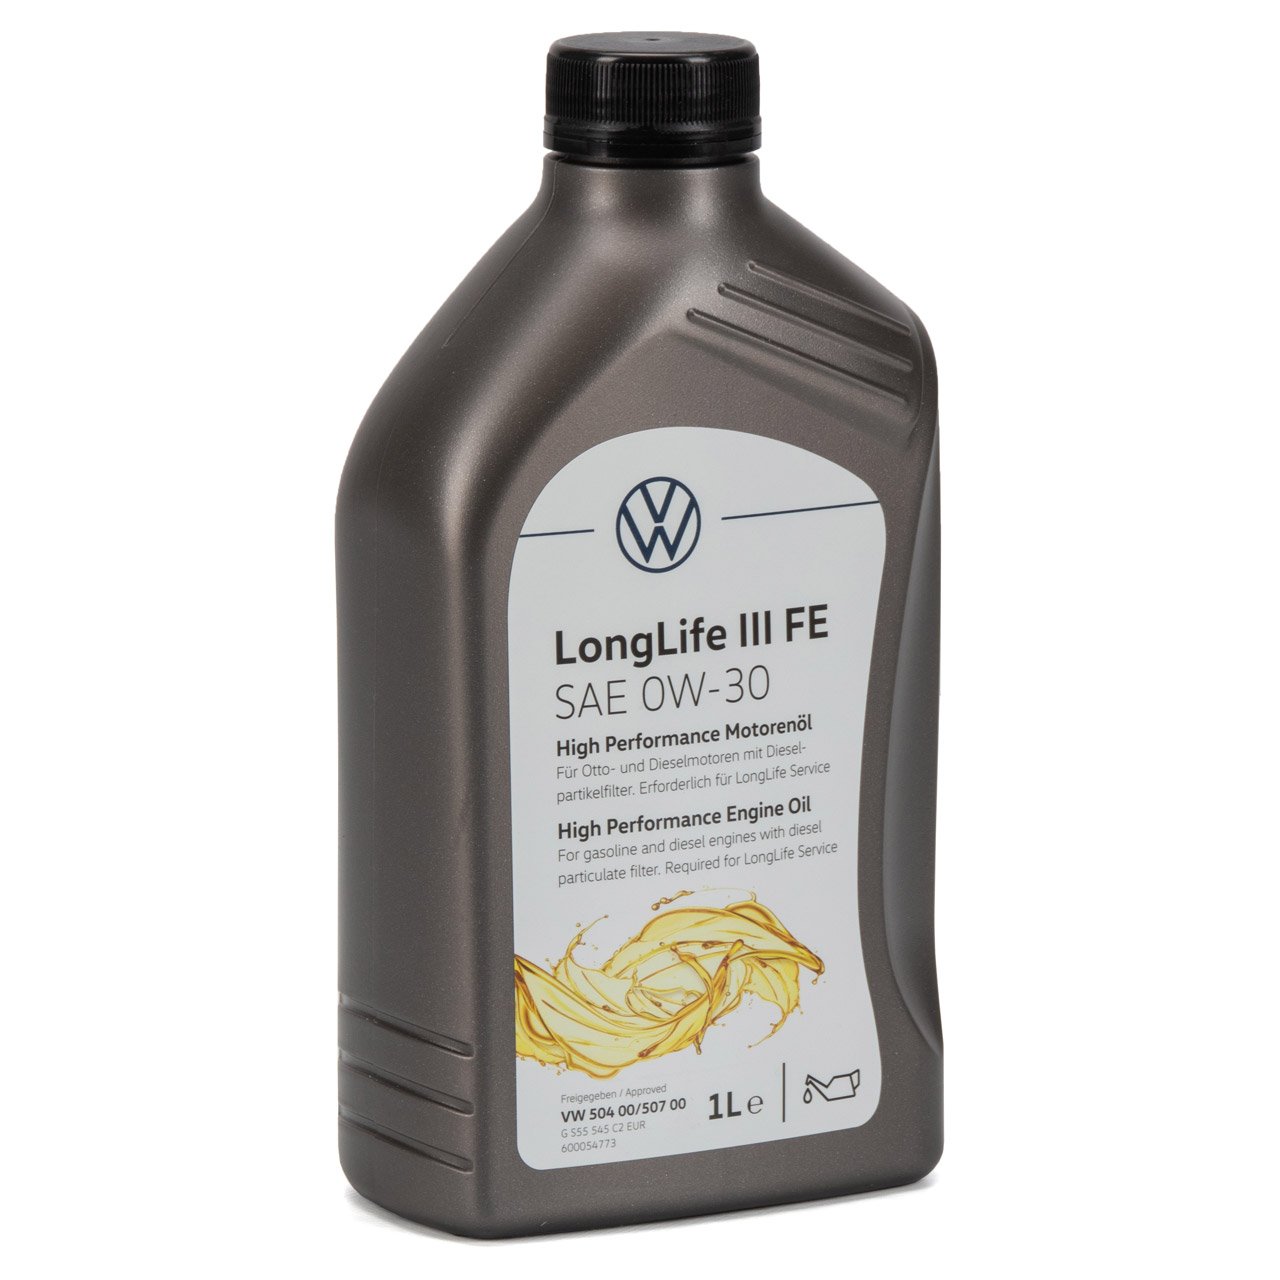 4L 4 Liter ORIGINAL VW Motoröl Öl 0W-30 LONGLIFE III FE 504.00 507.00 GS55545C2